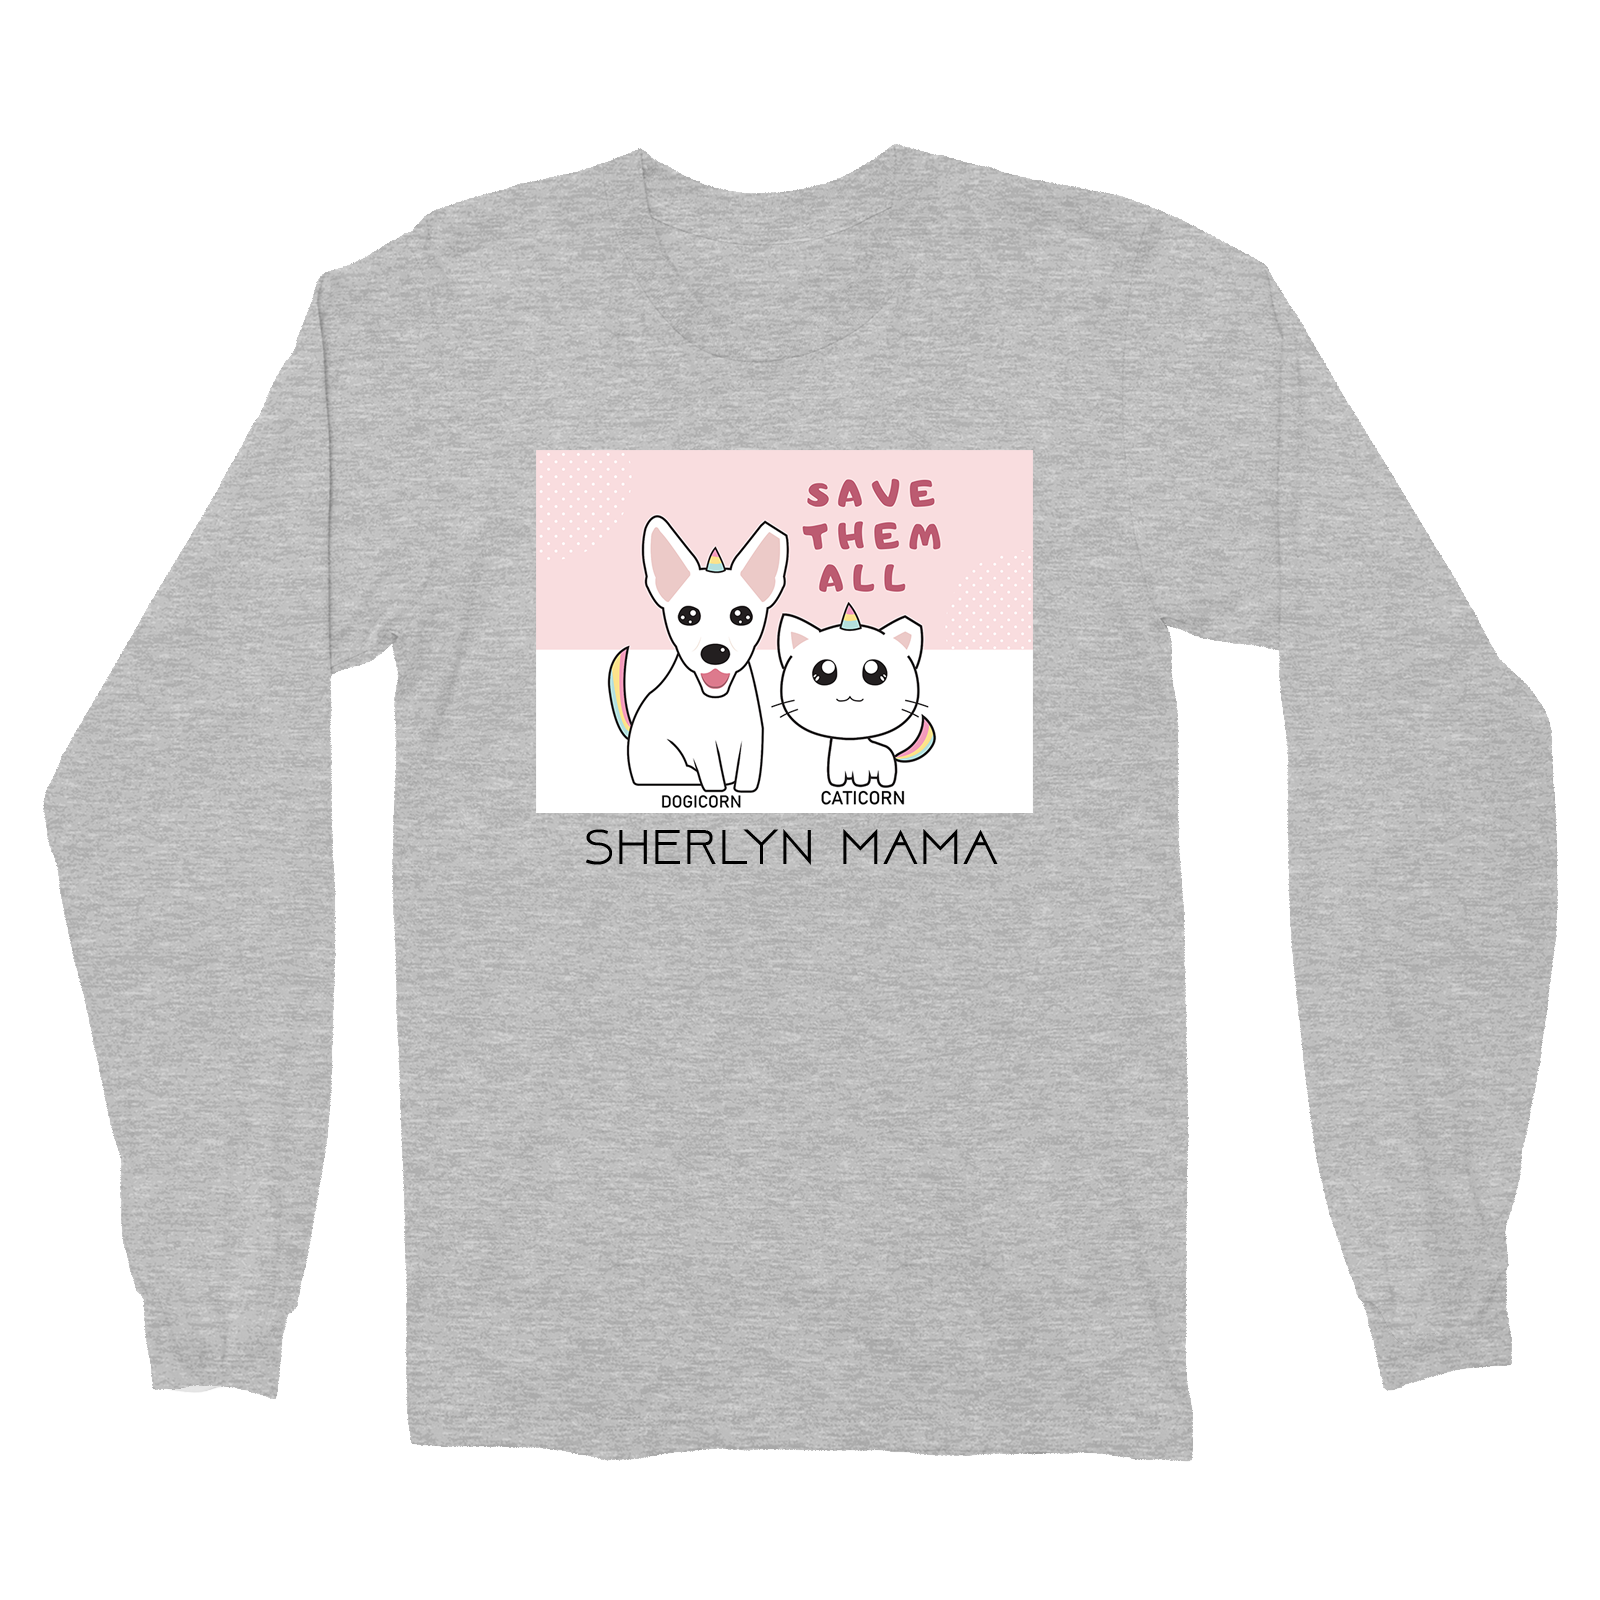 Sherlyn Mama Cute Mix Dogicorn and Caticorn Accessories Long Sleeve Unisex T-Shirt